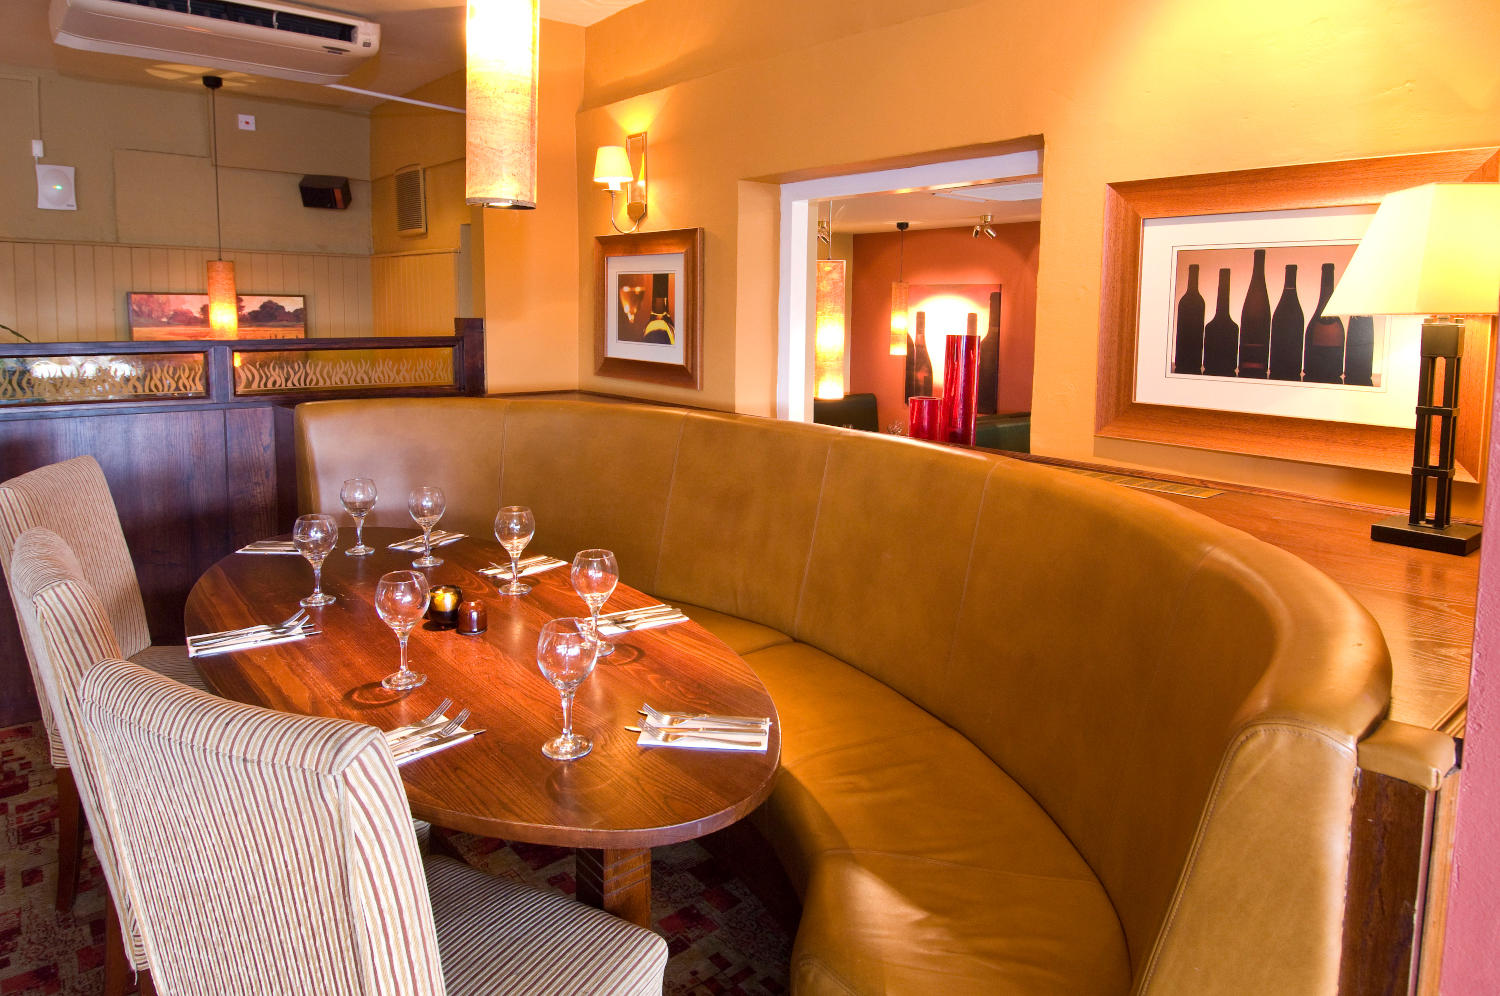 Beefeater restaurant interior Premier Inn Tring Tring 03333 219101